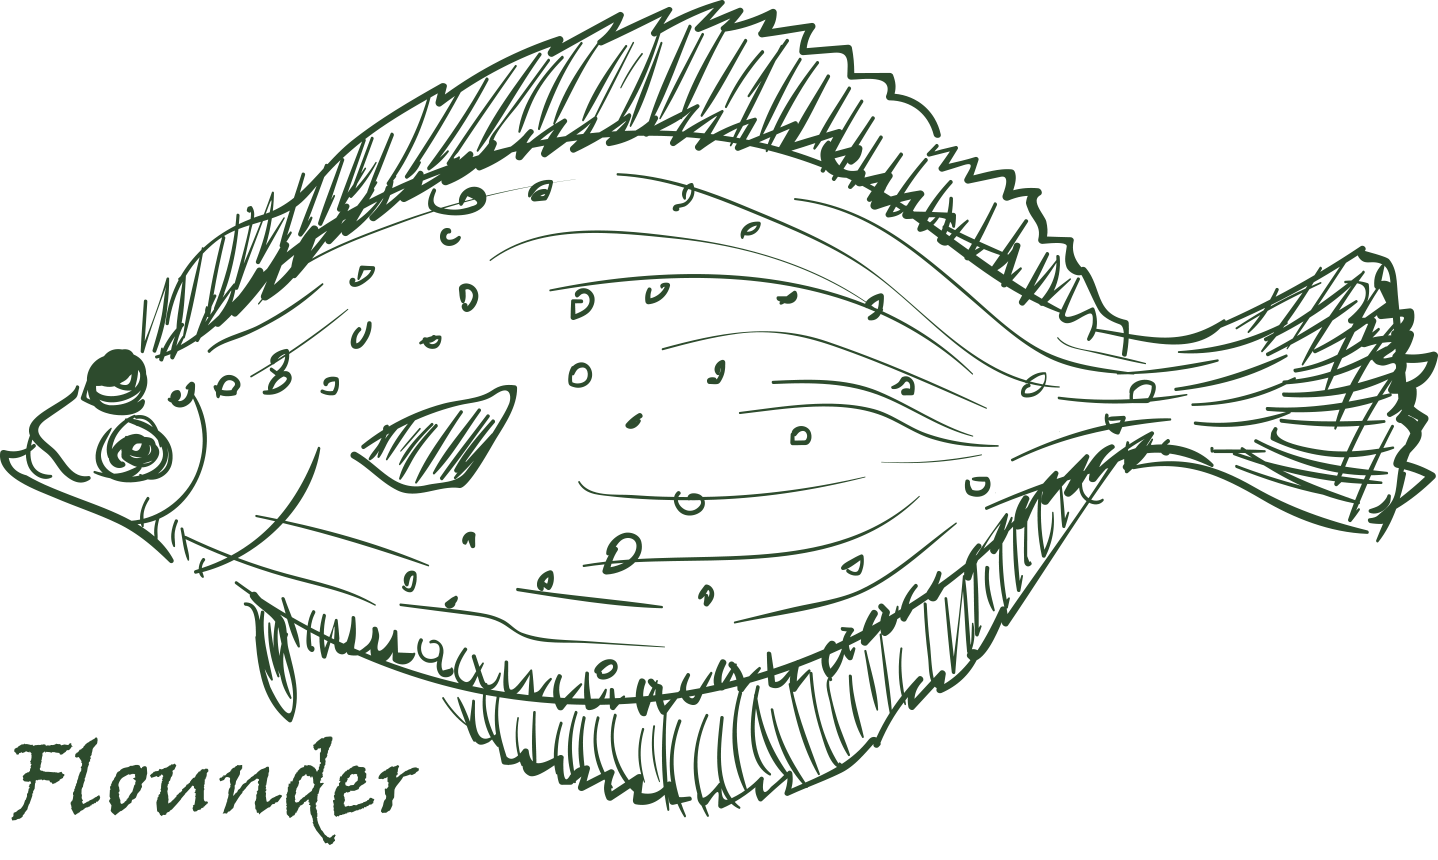 Flounder Fish Silouhette